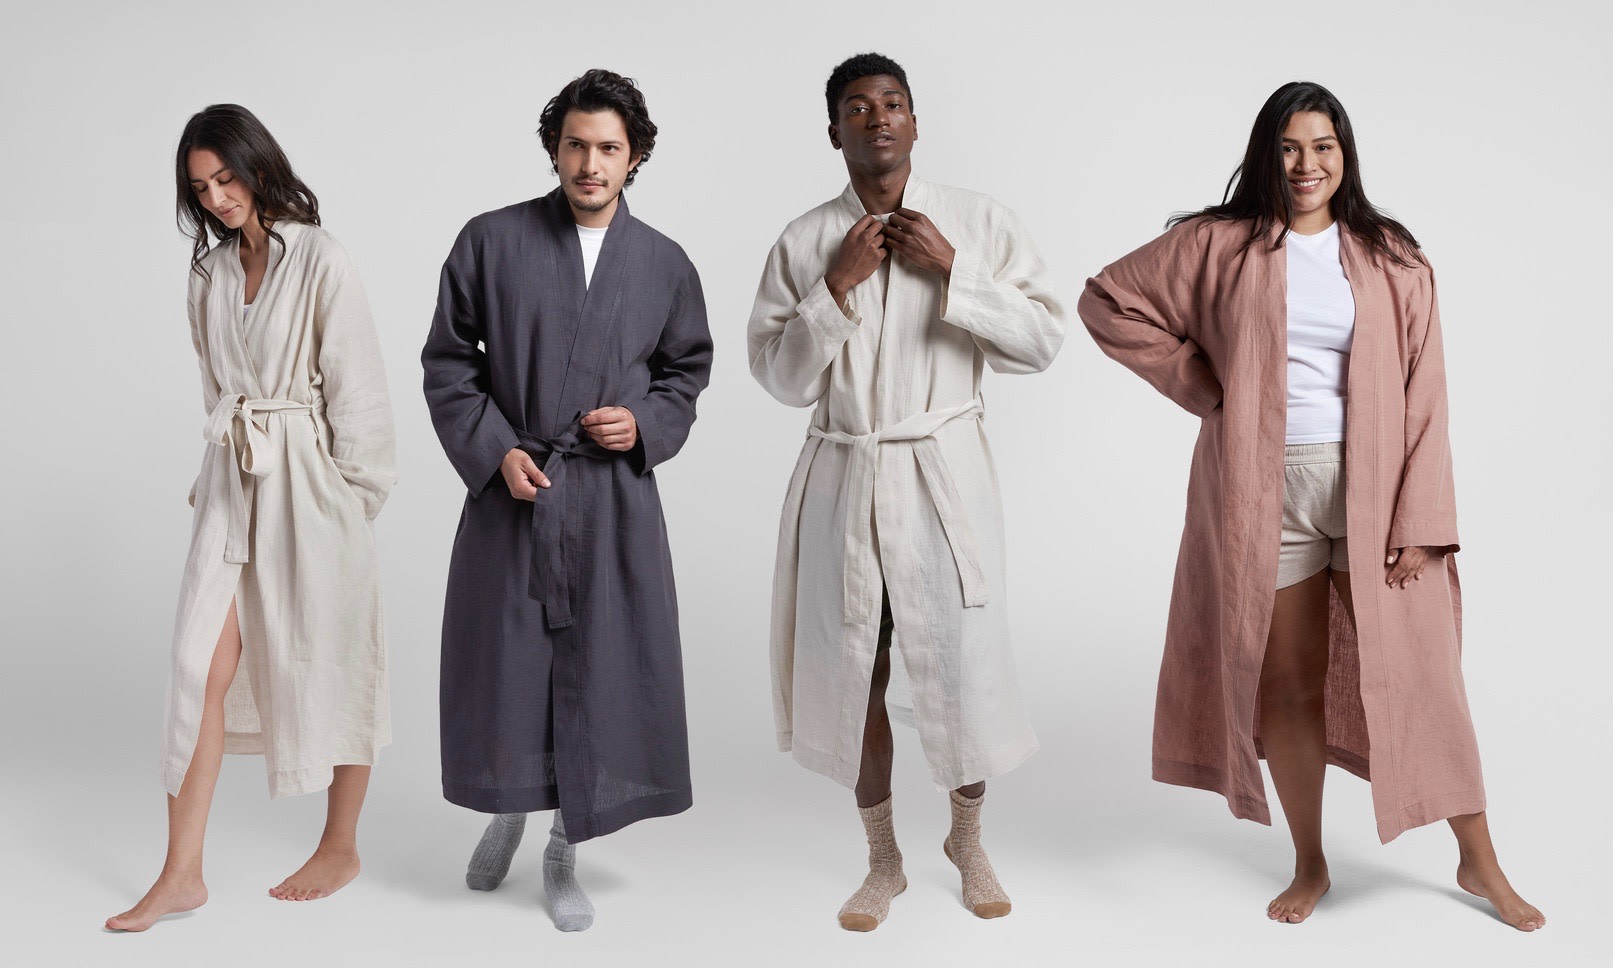 4 models in the linen robe. 